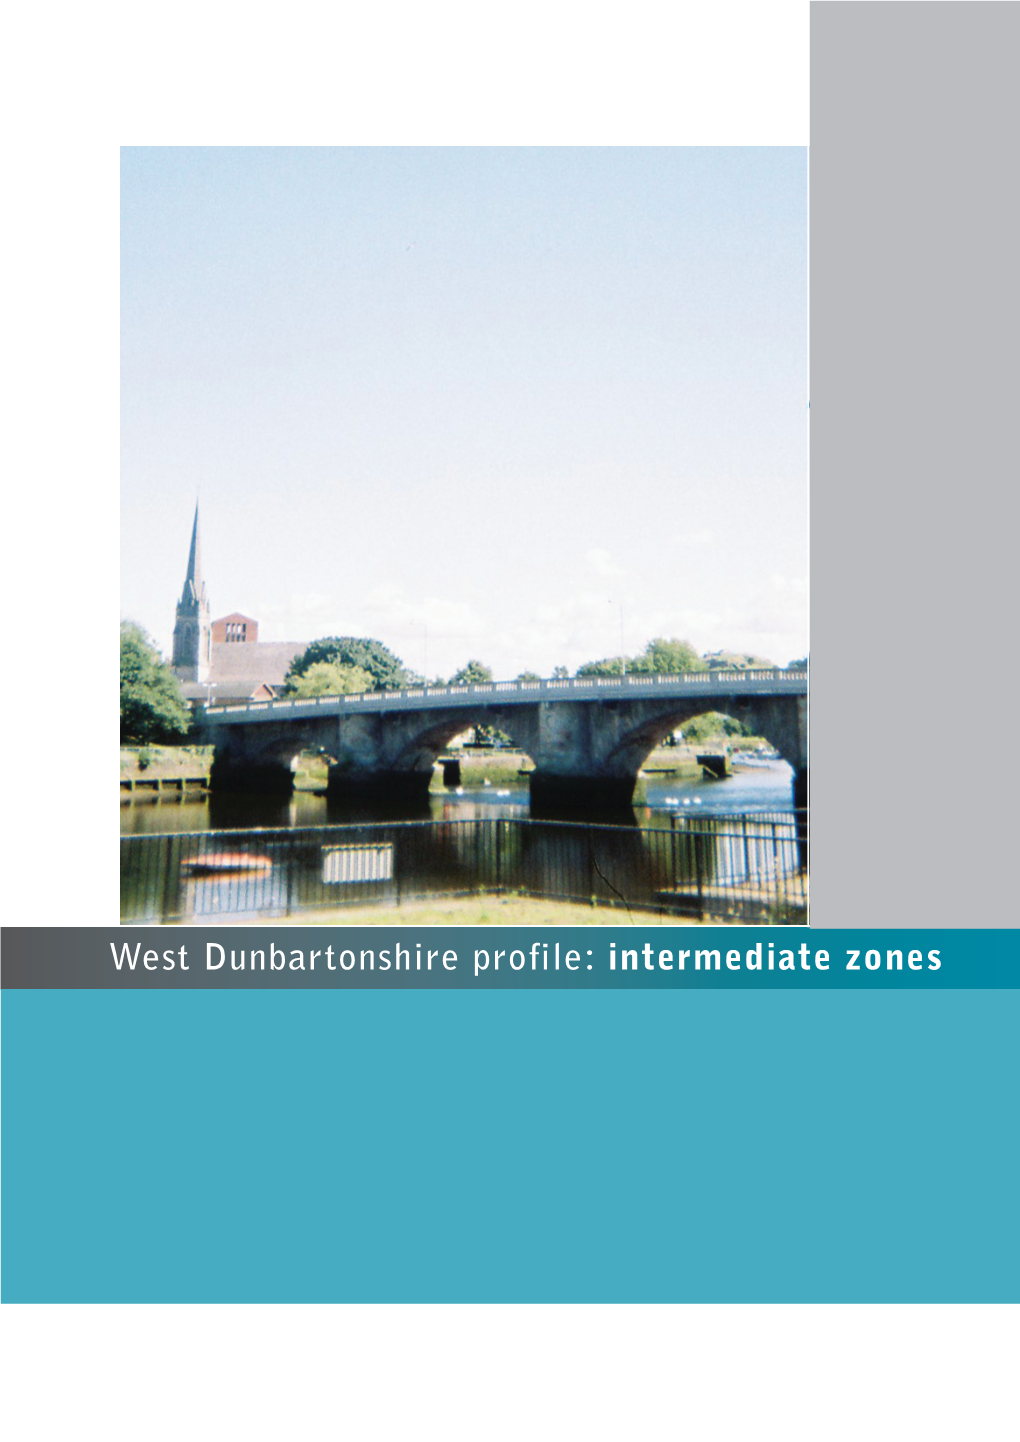 West Dunbartonshire Profile: Intermediate Zones Map of West Dunbartonshire